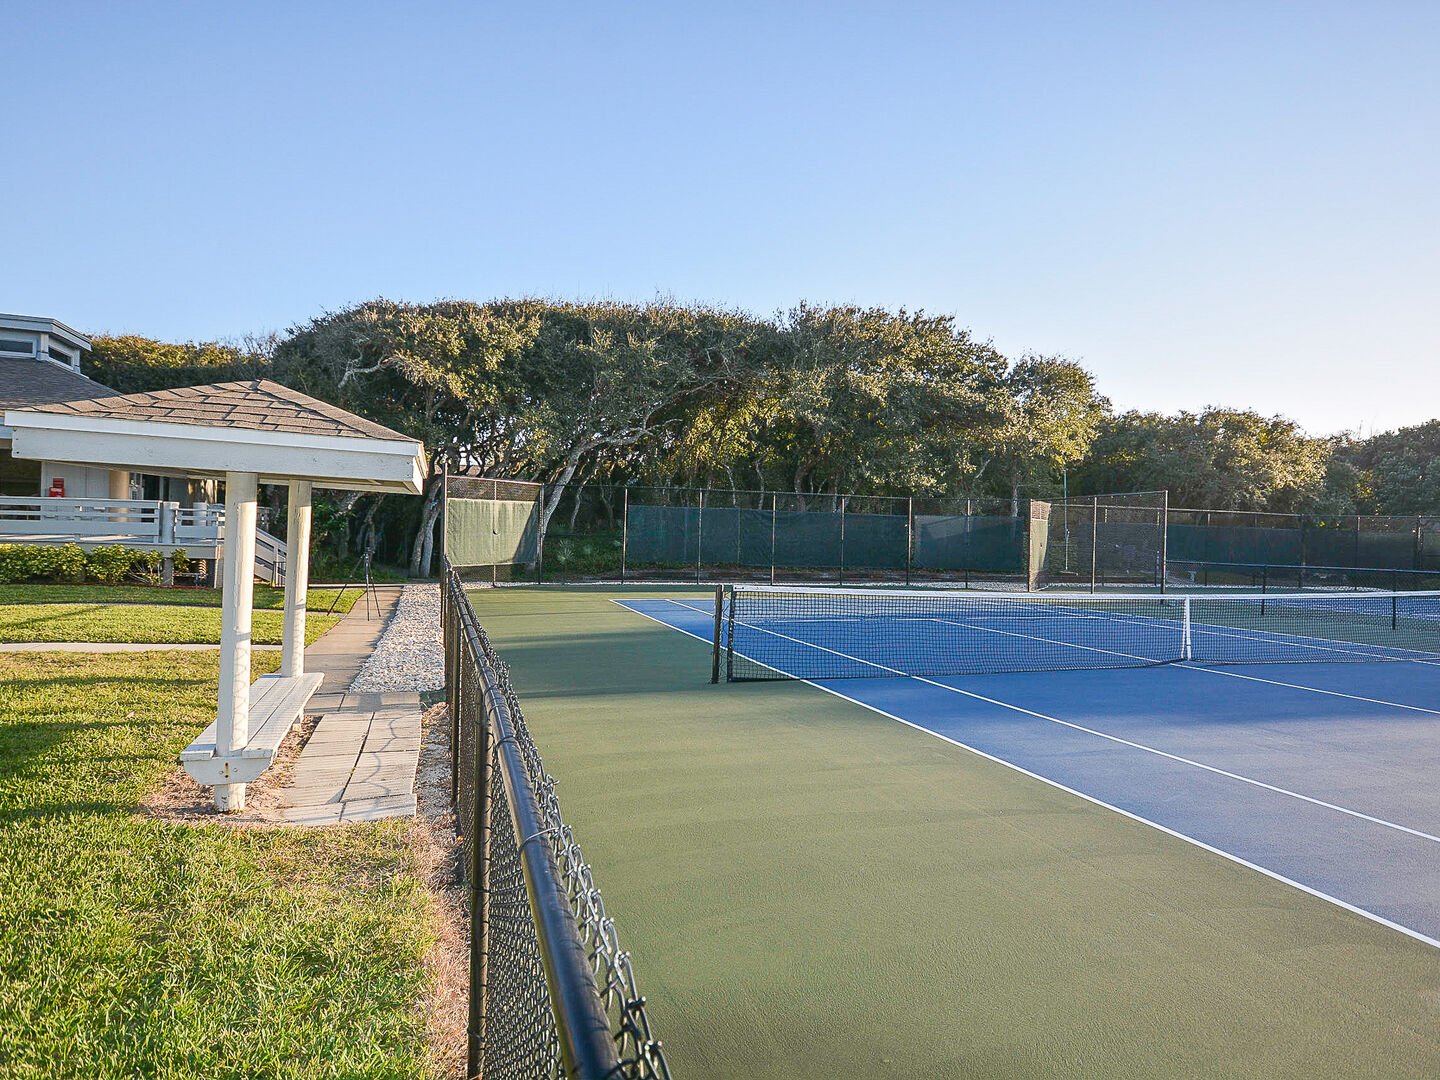 Tennis court near our New Smyrna Beach Condo Rental